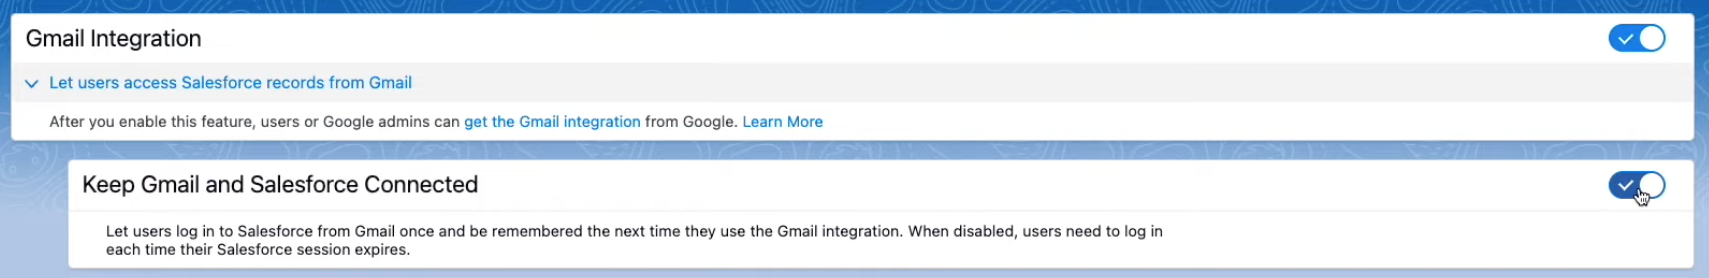 Gmail Integration Salesforce